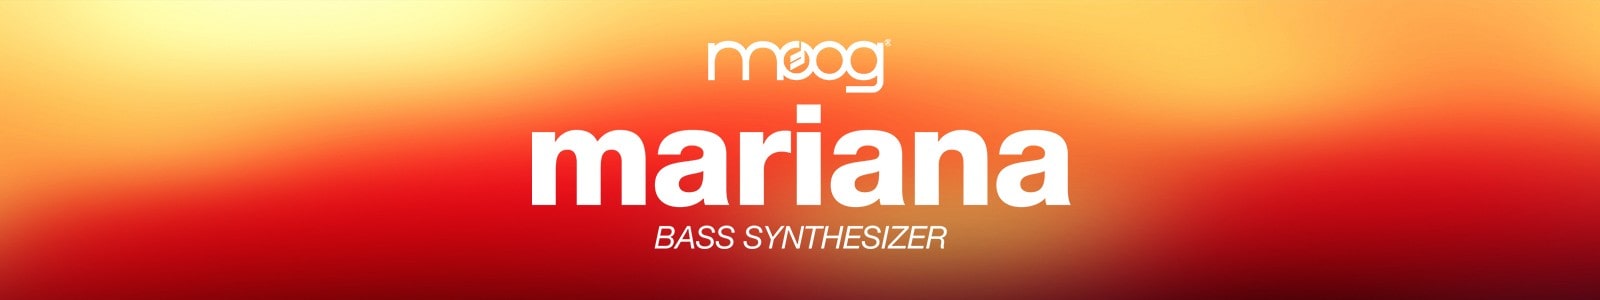 Mariana Bass Synthesizer by Moog